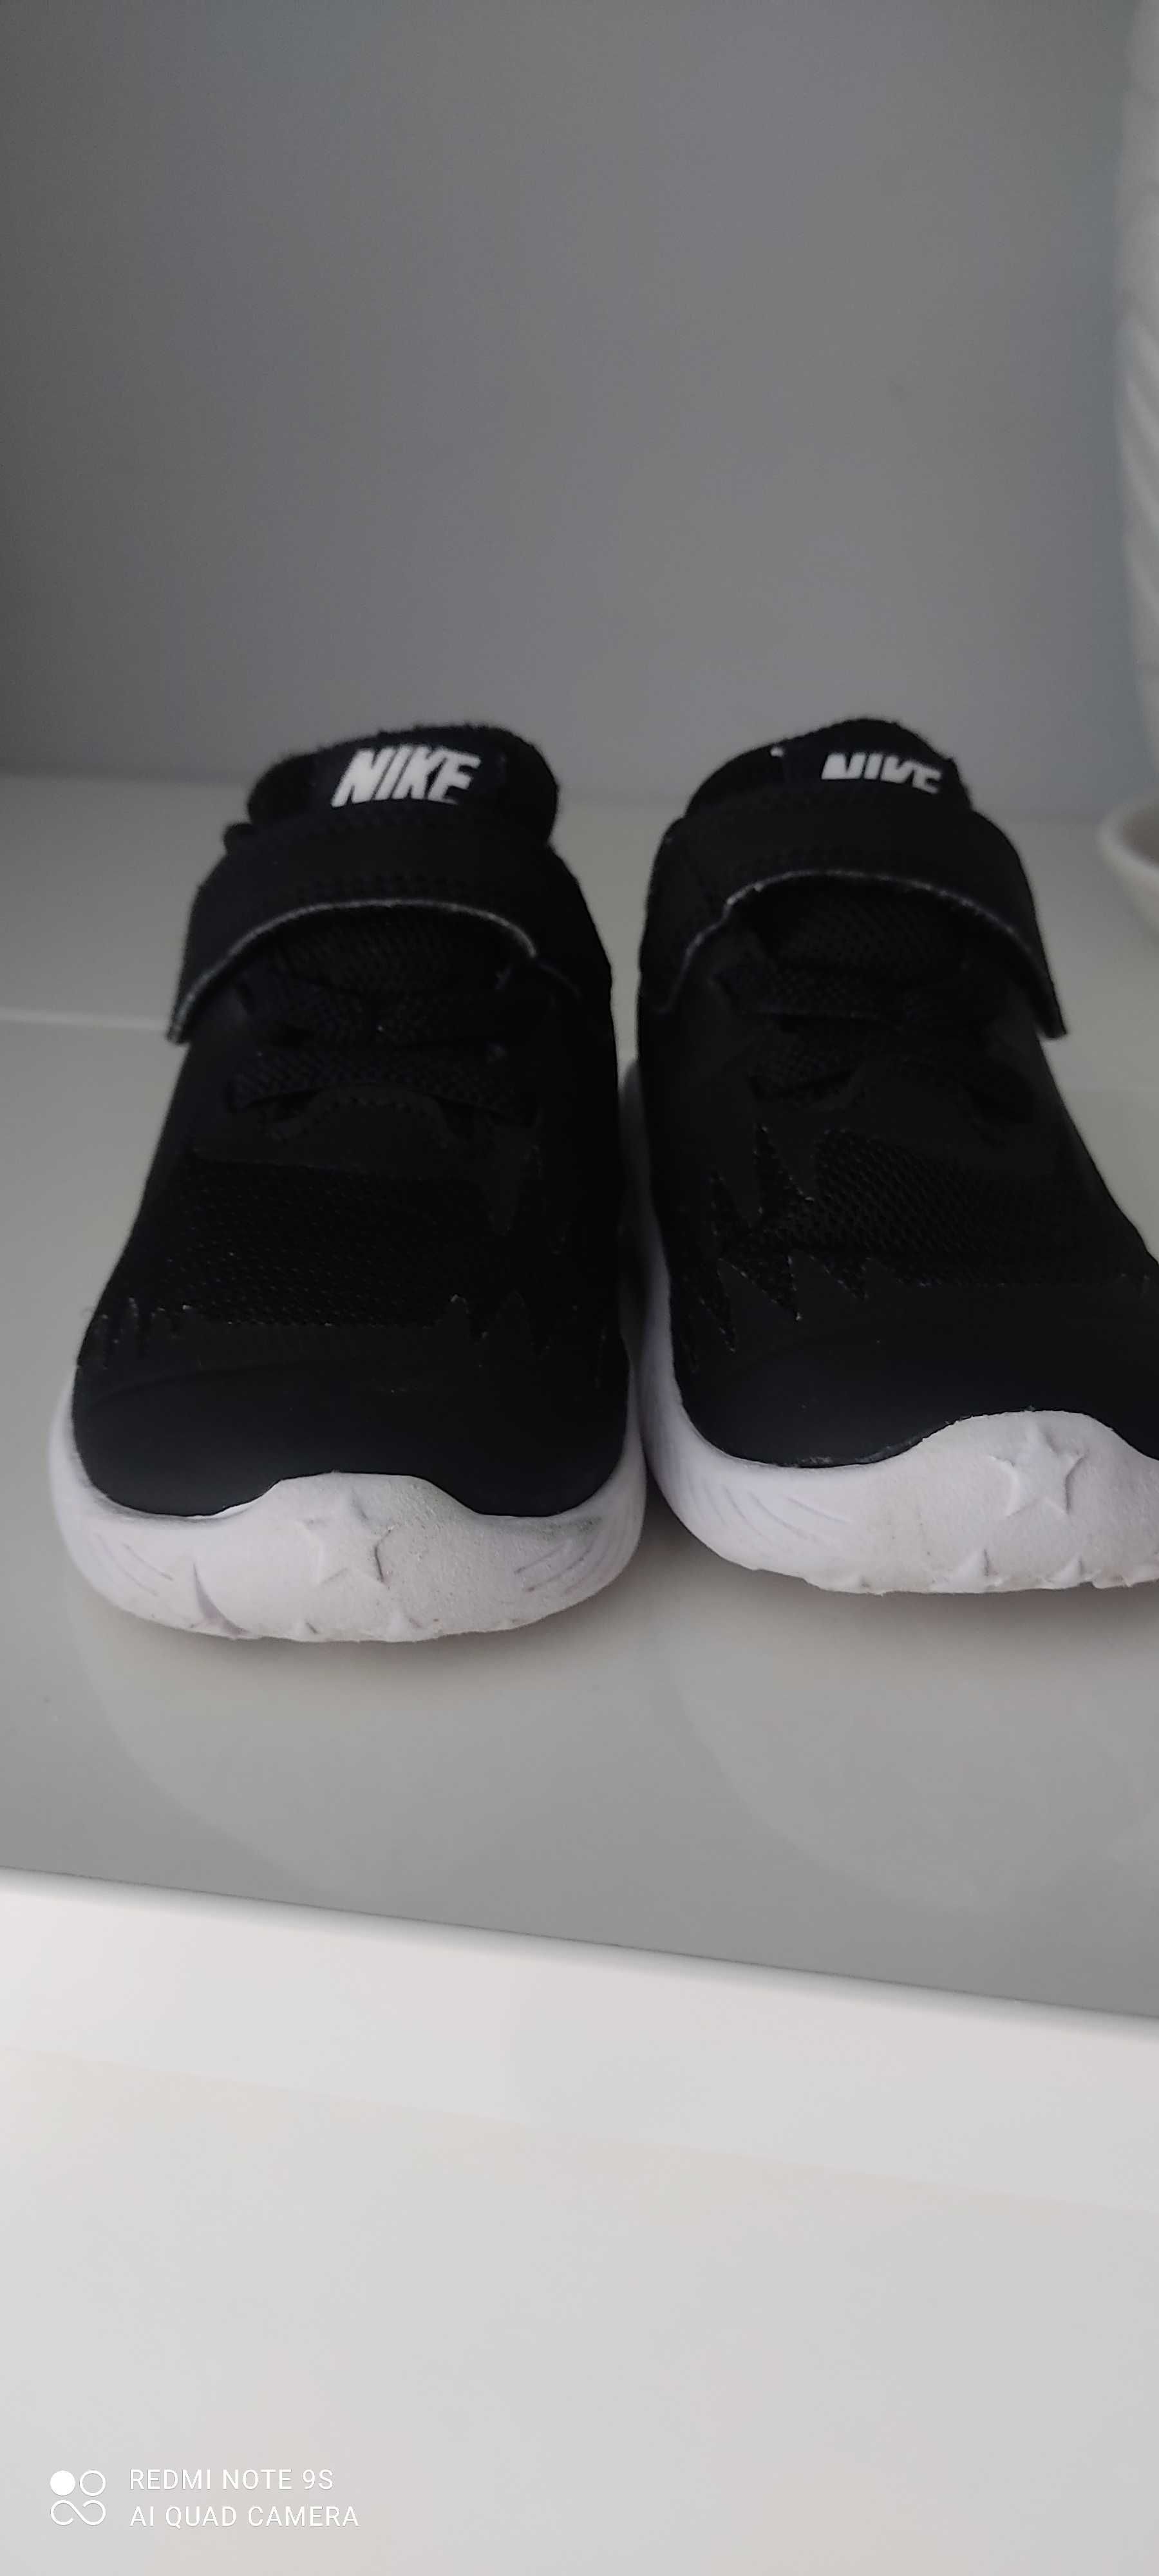 Buciki chłopięce Nike r 22